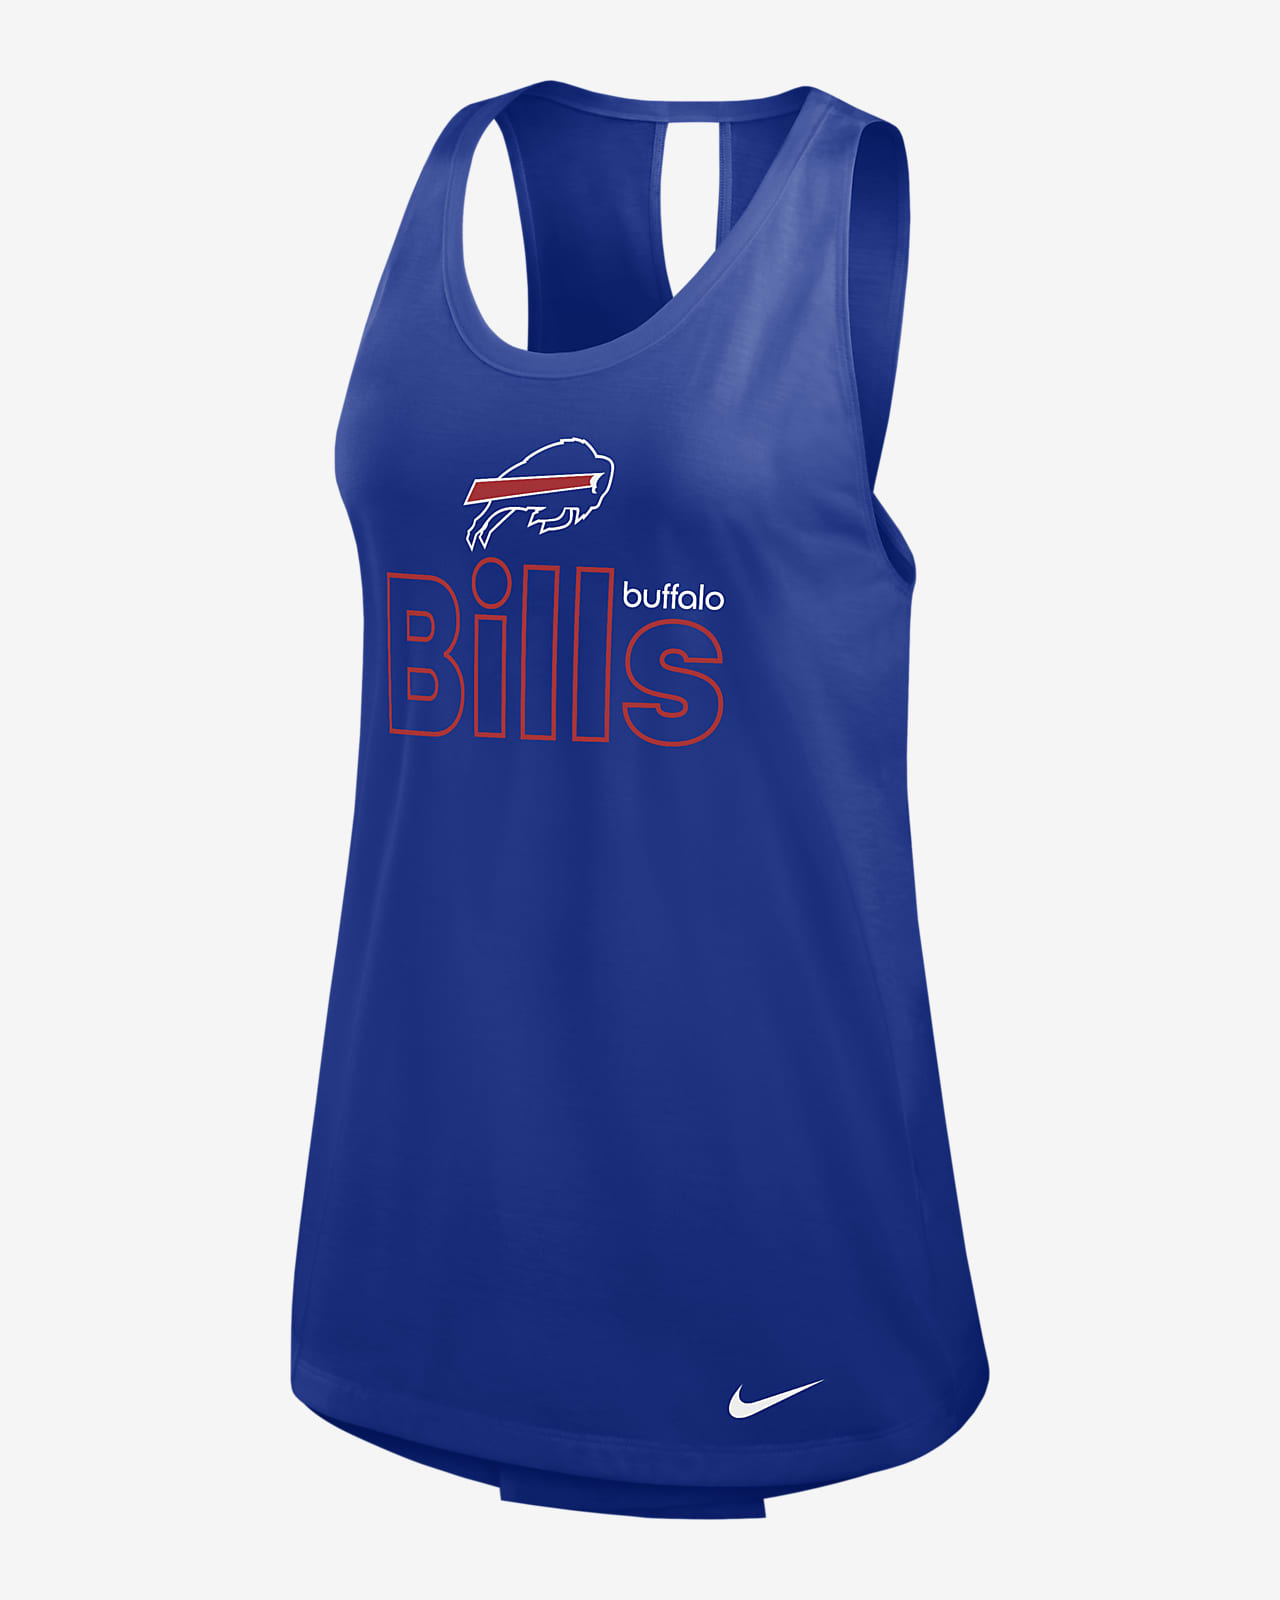 Camiseta de tirantes Nike Dri-FIT de la NFL para mujer Buffalo Bills